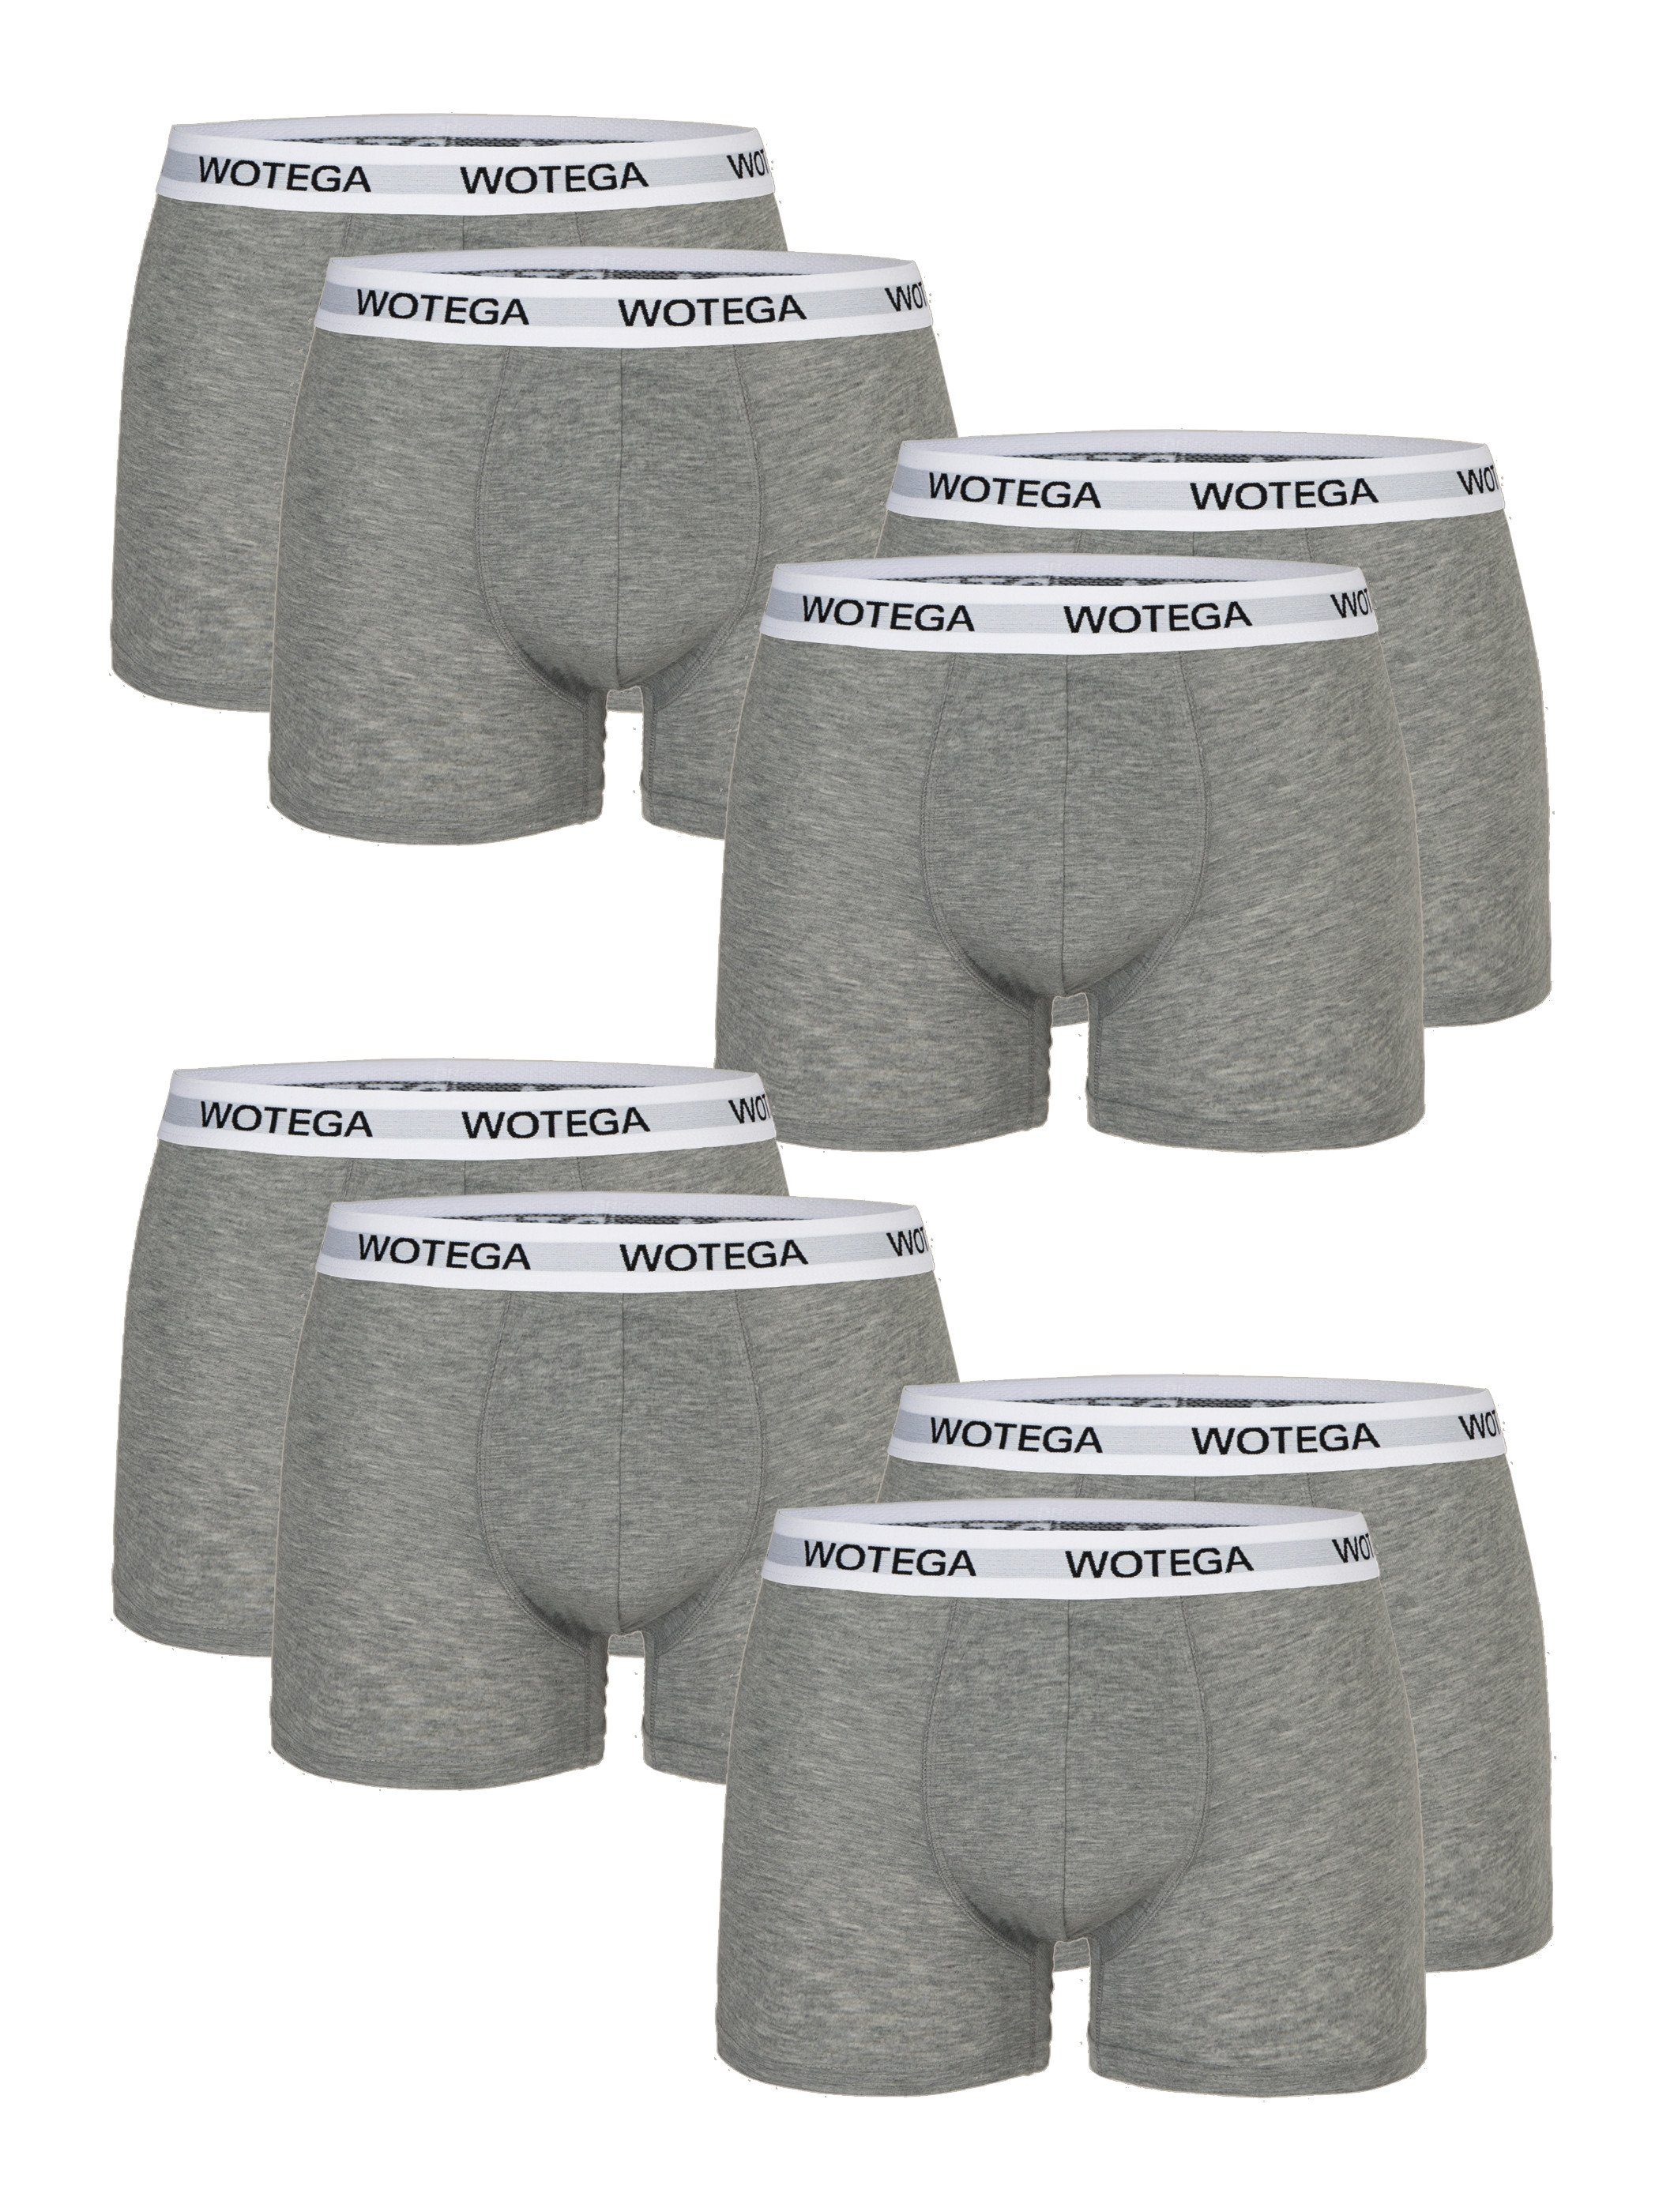 WOTEGA Boxershorts Joe (Spar-Set, 8er-Pack) moderne Baumwoll Unterhosen exklusiv im 8er Pack Grau (Lilac Gray 163905)